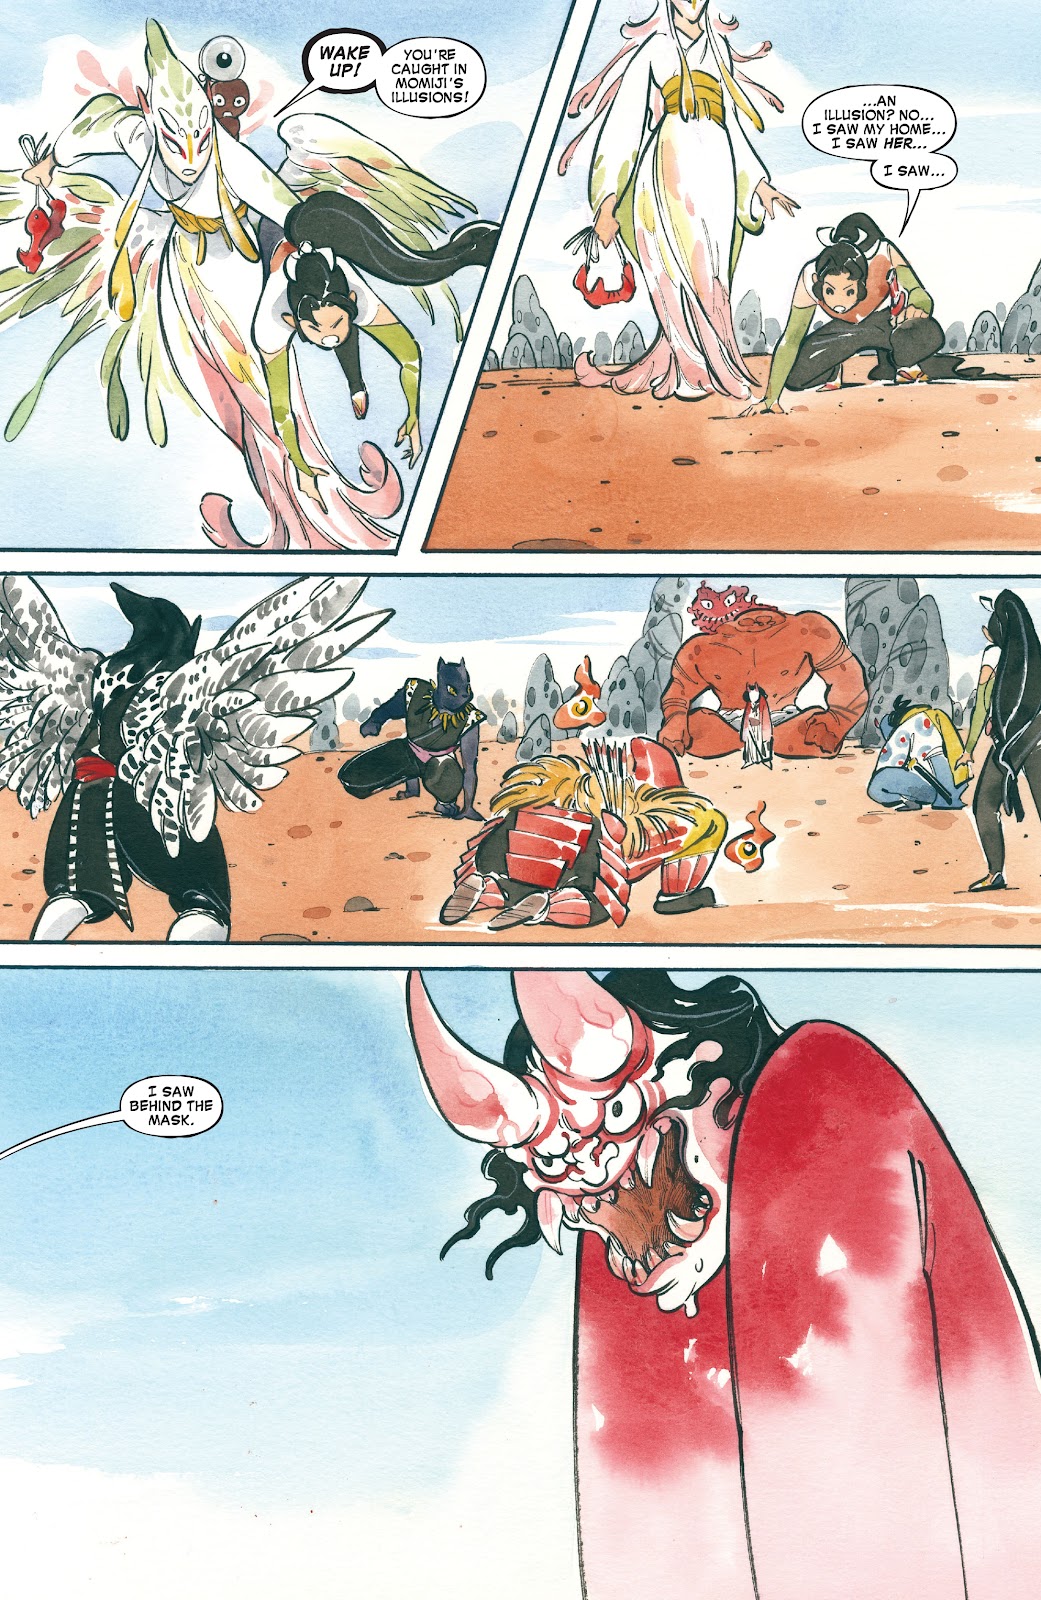 Demon Wars: Scarlet Sin issue 1 - Page 20